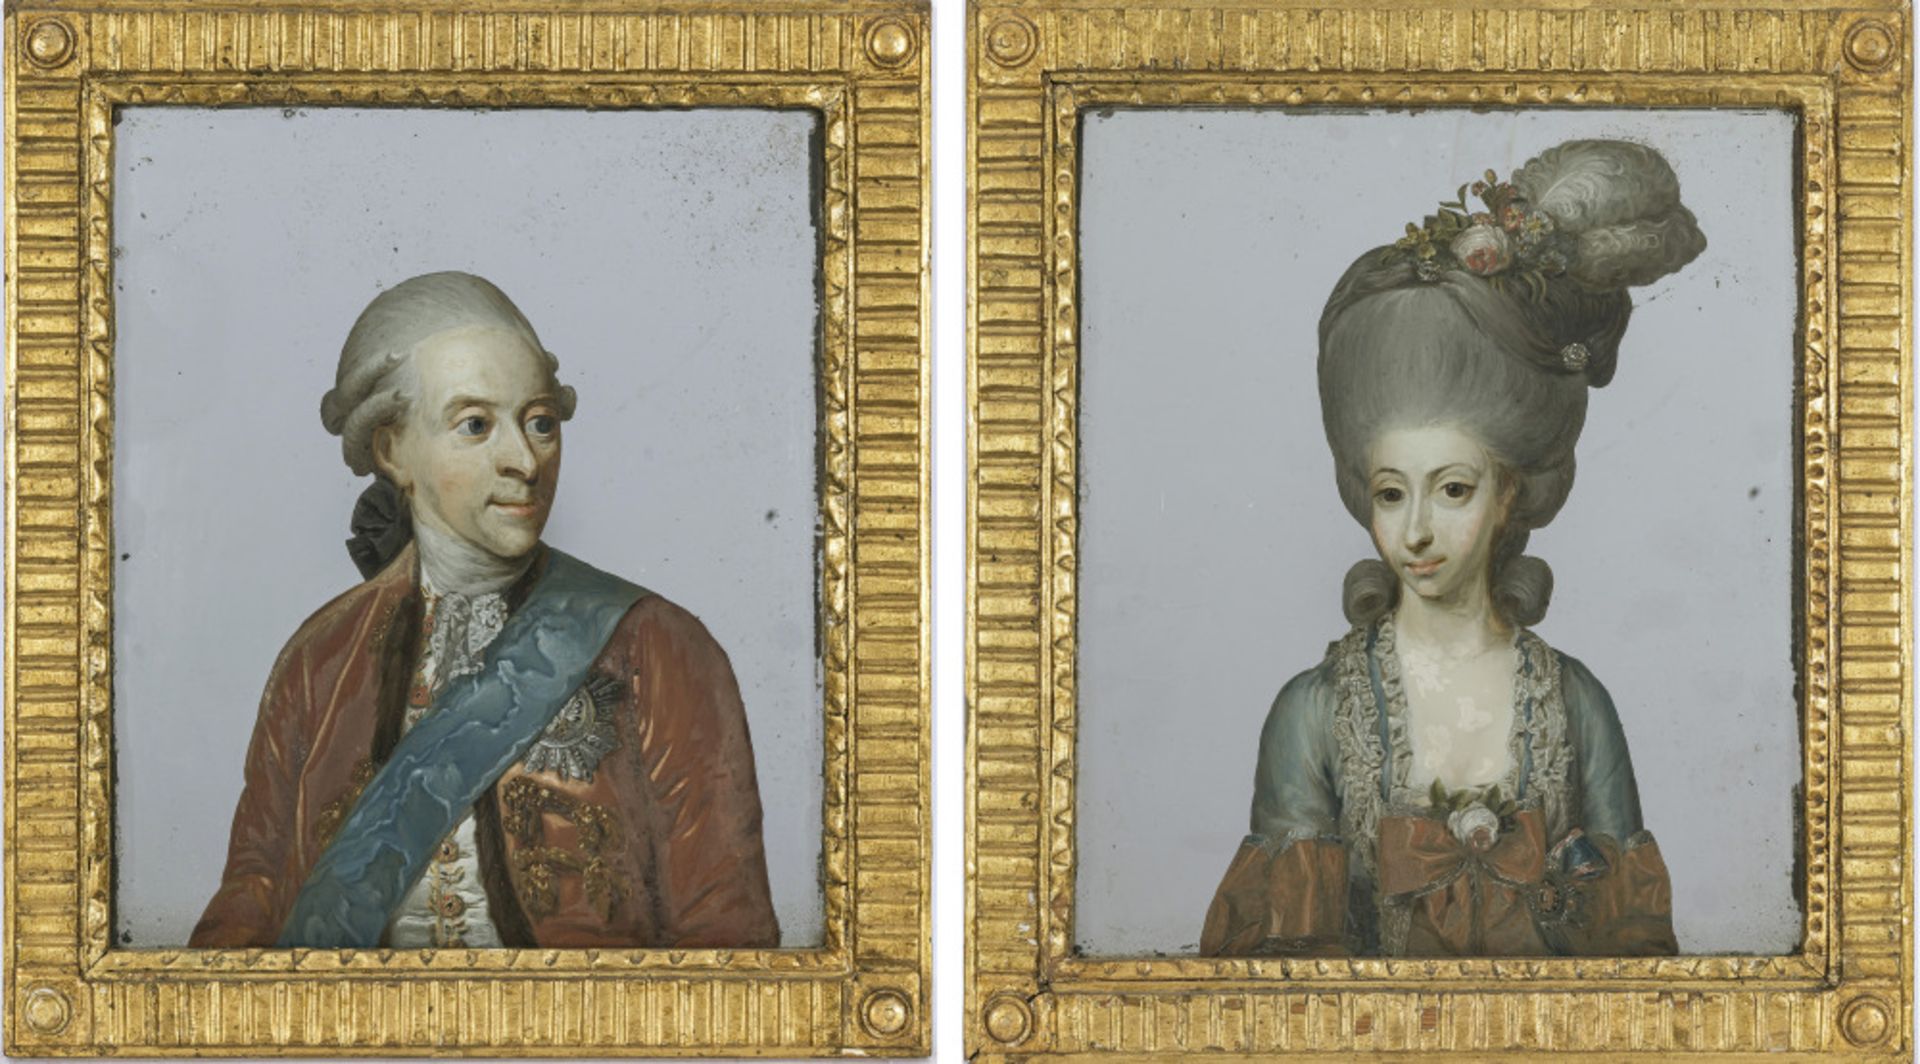 Portraits of the Hereditary Prince Frederick (1753 - 1805) and Hereditary Princess Sophia Frederica